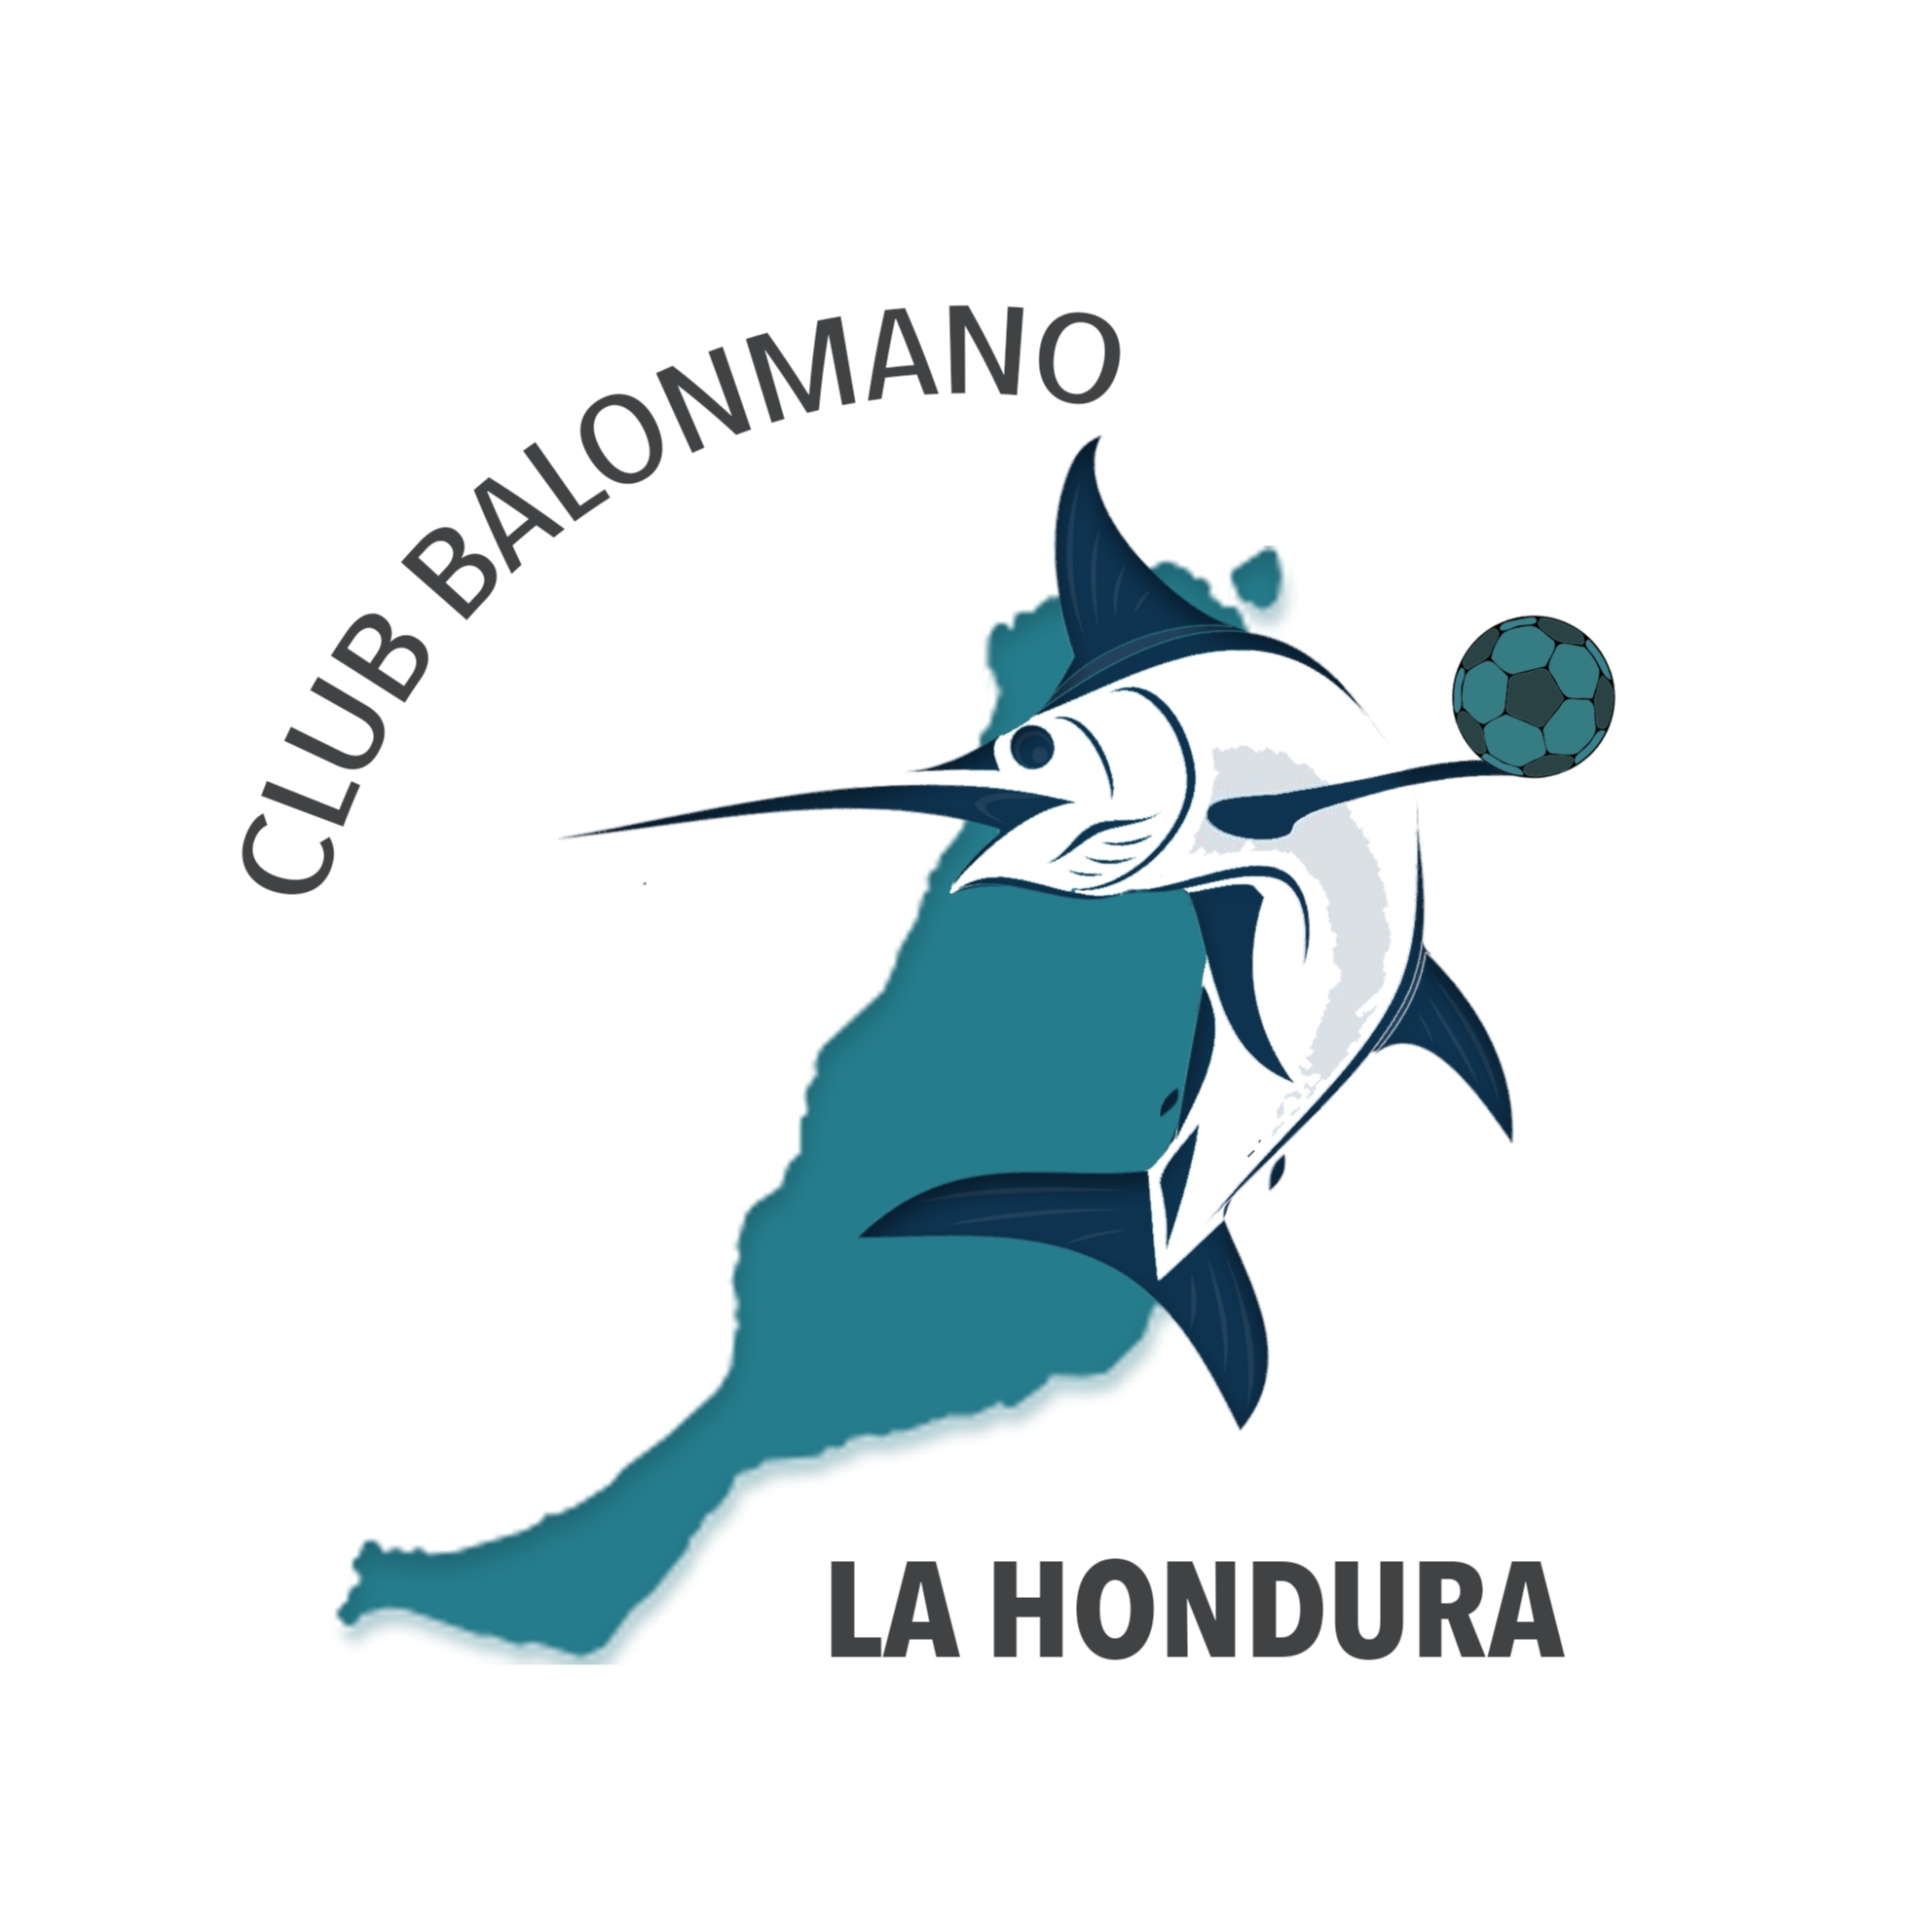 CLUB DEPORTIVO DE PESCA LA HONDURA